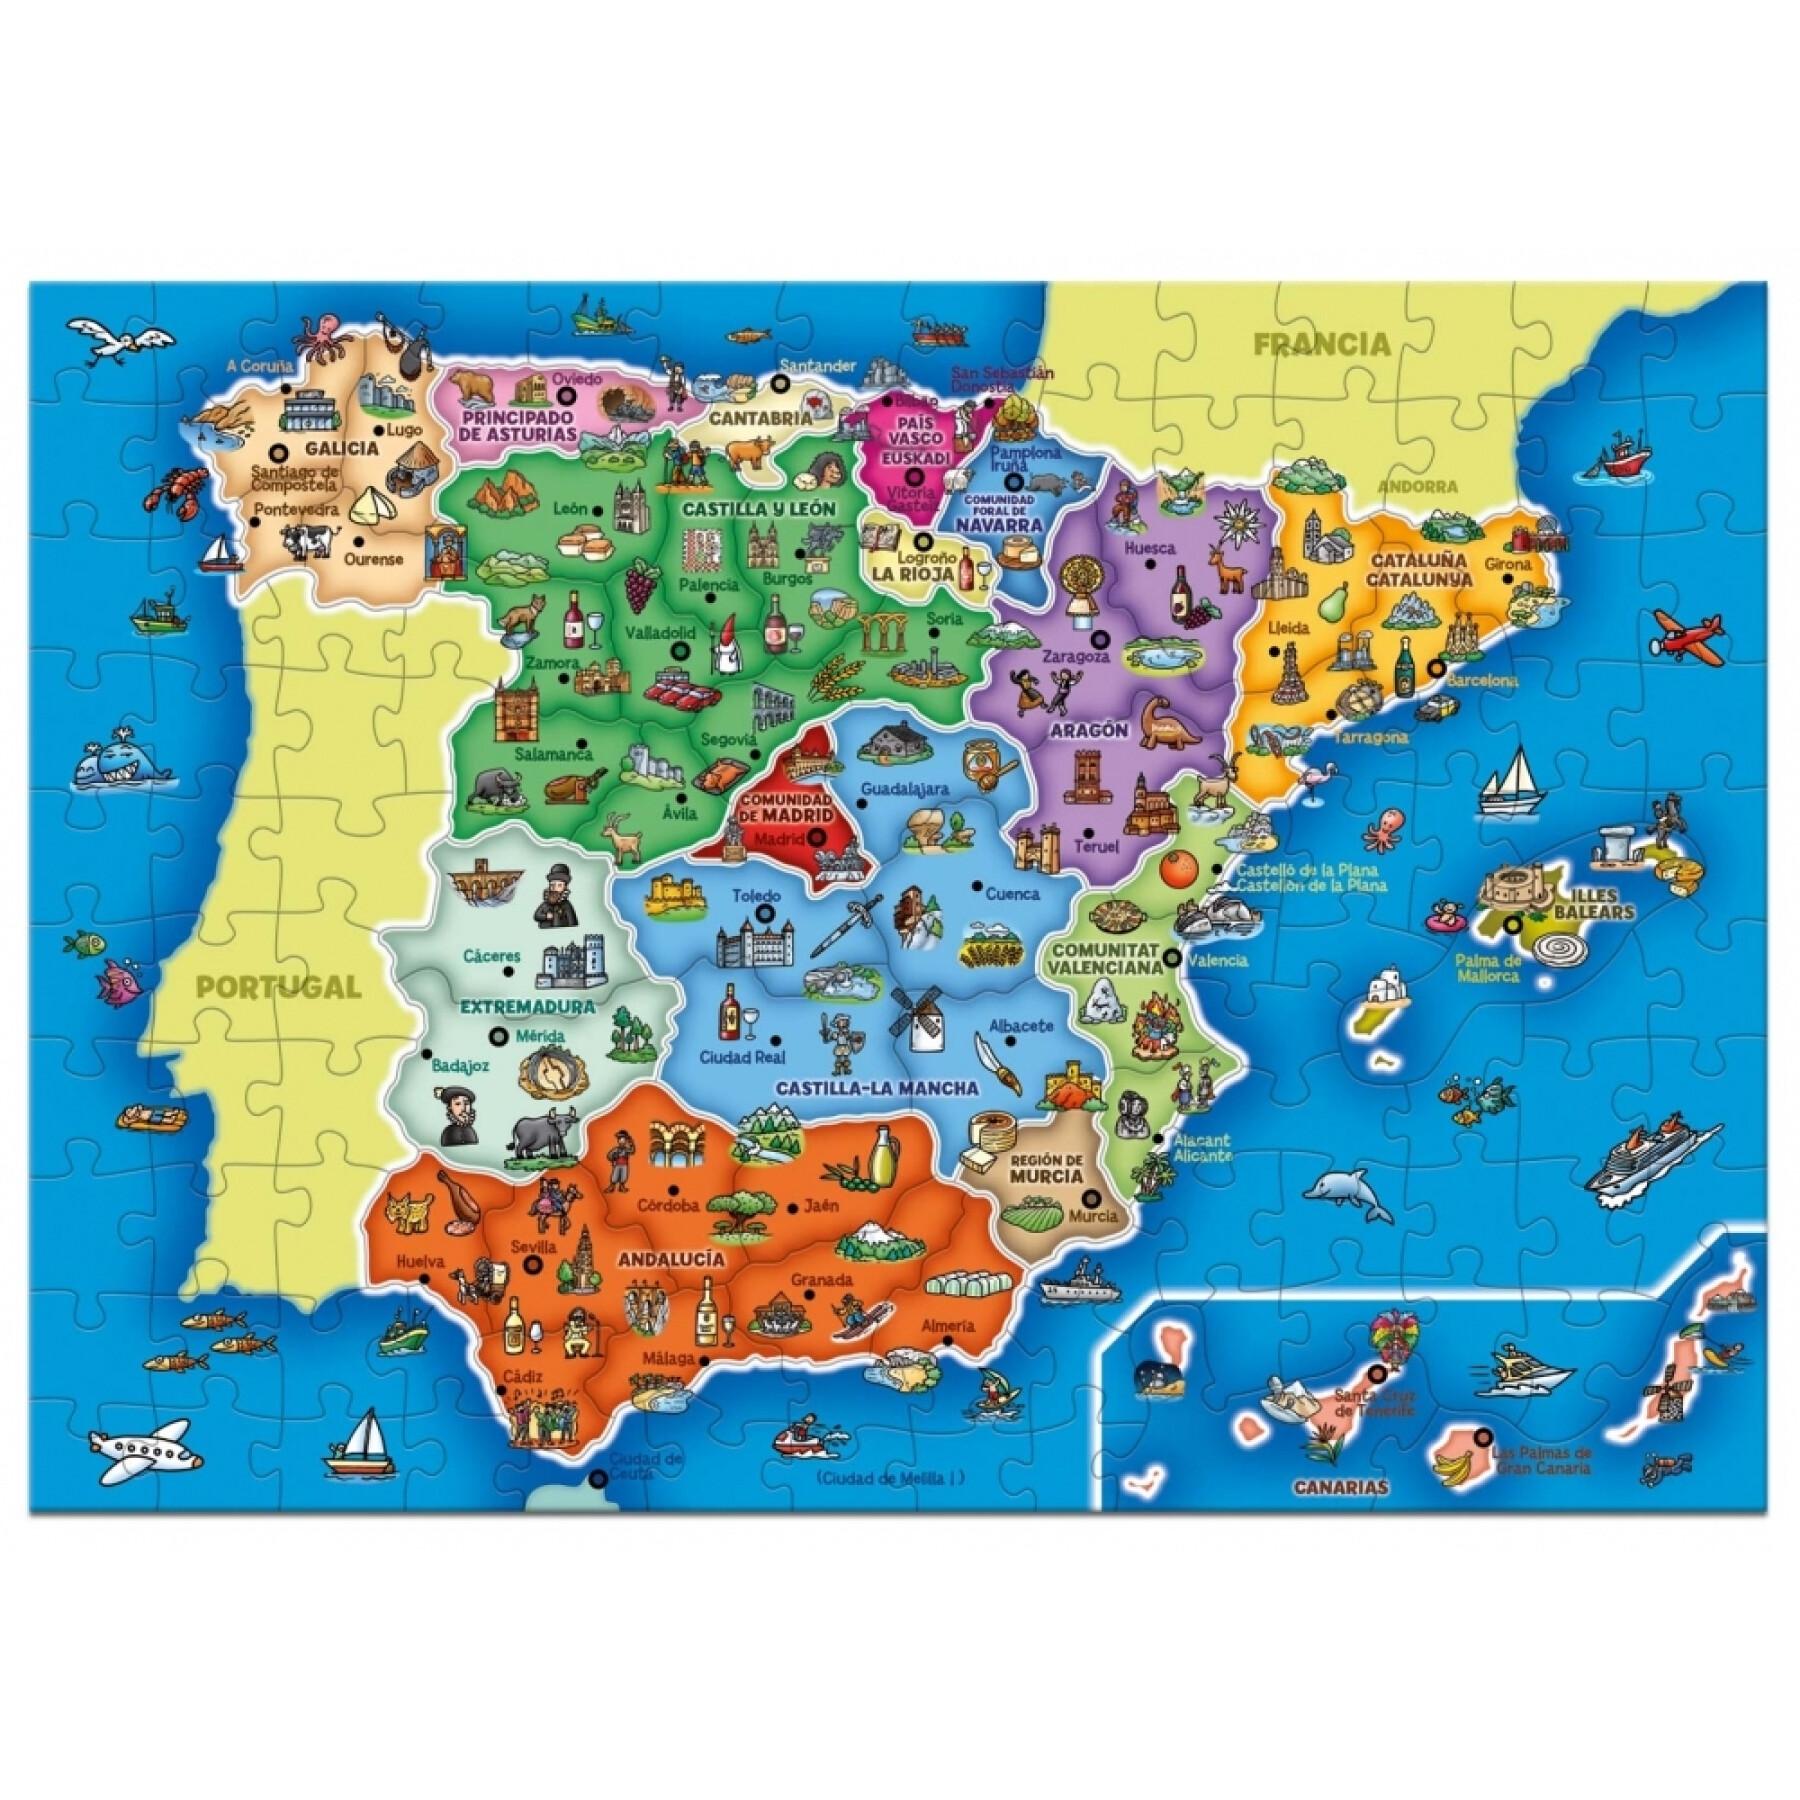 137-elementowe puzzle Diset España Prov -Autonomías